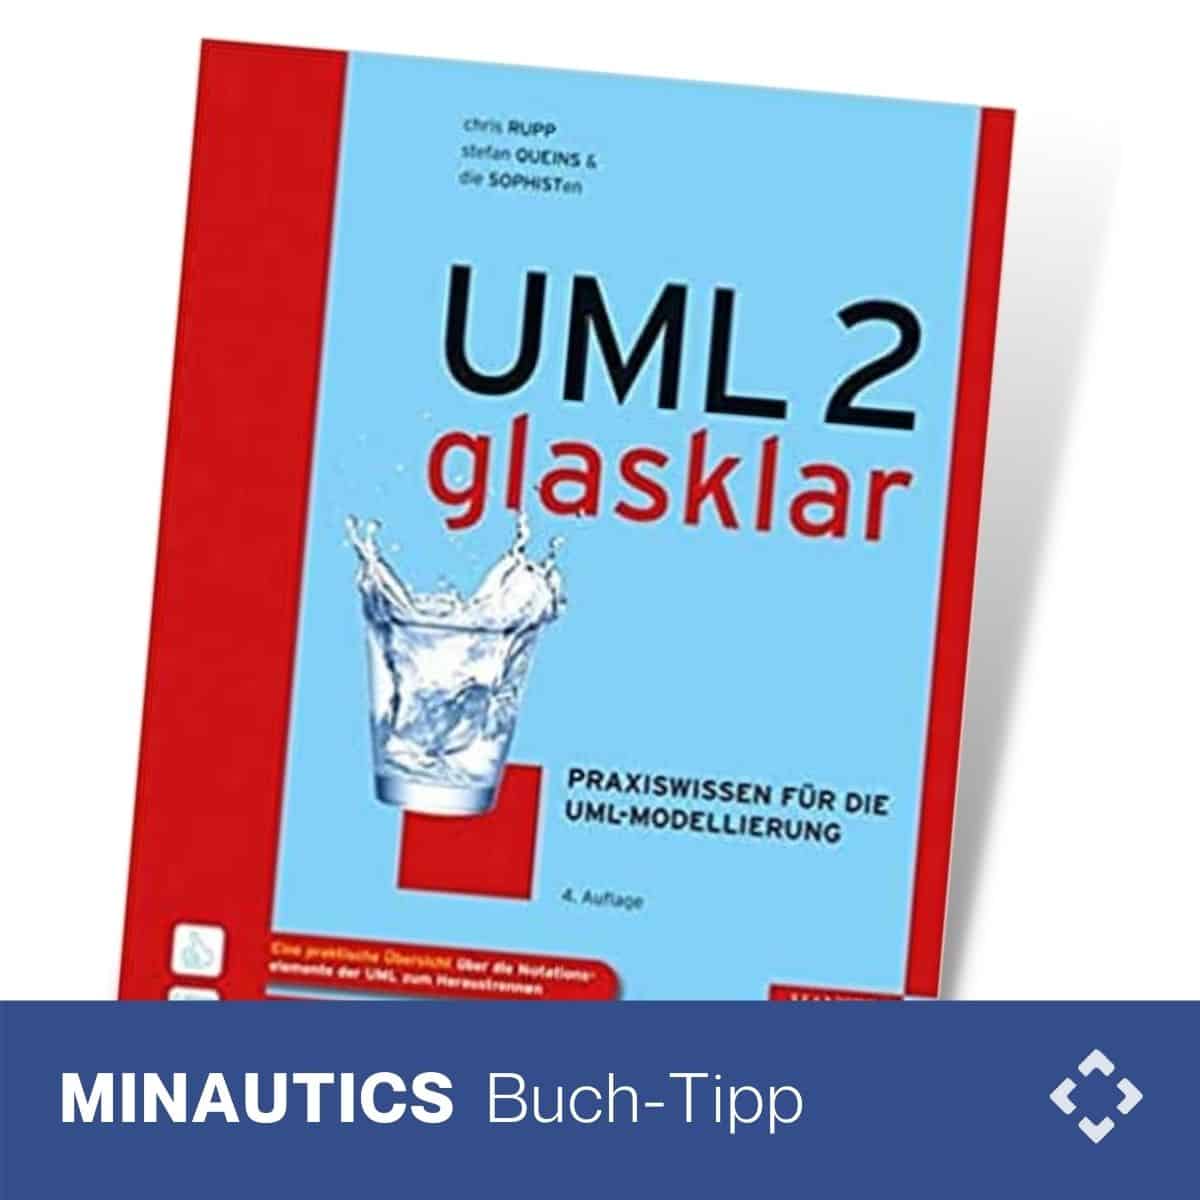 UML 2 glasklar 0 (0)